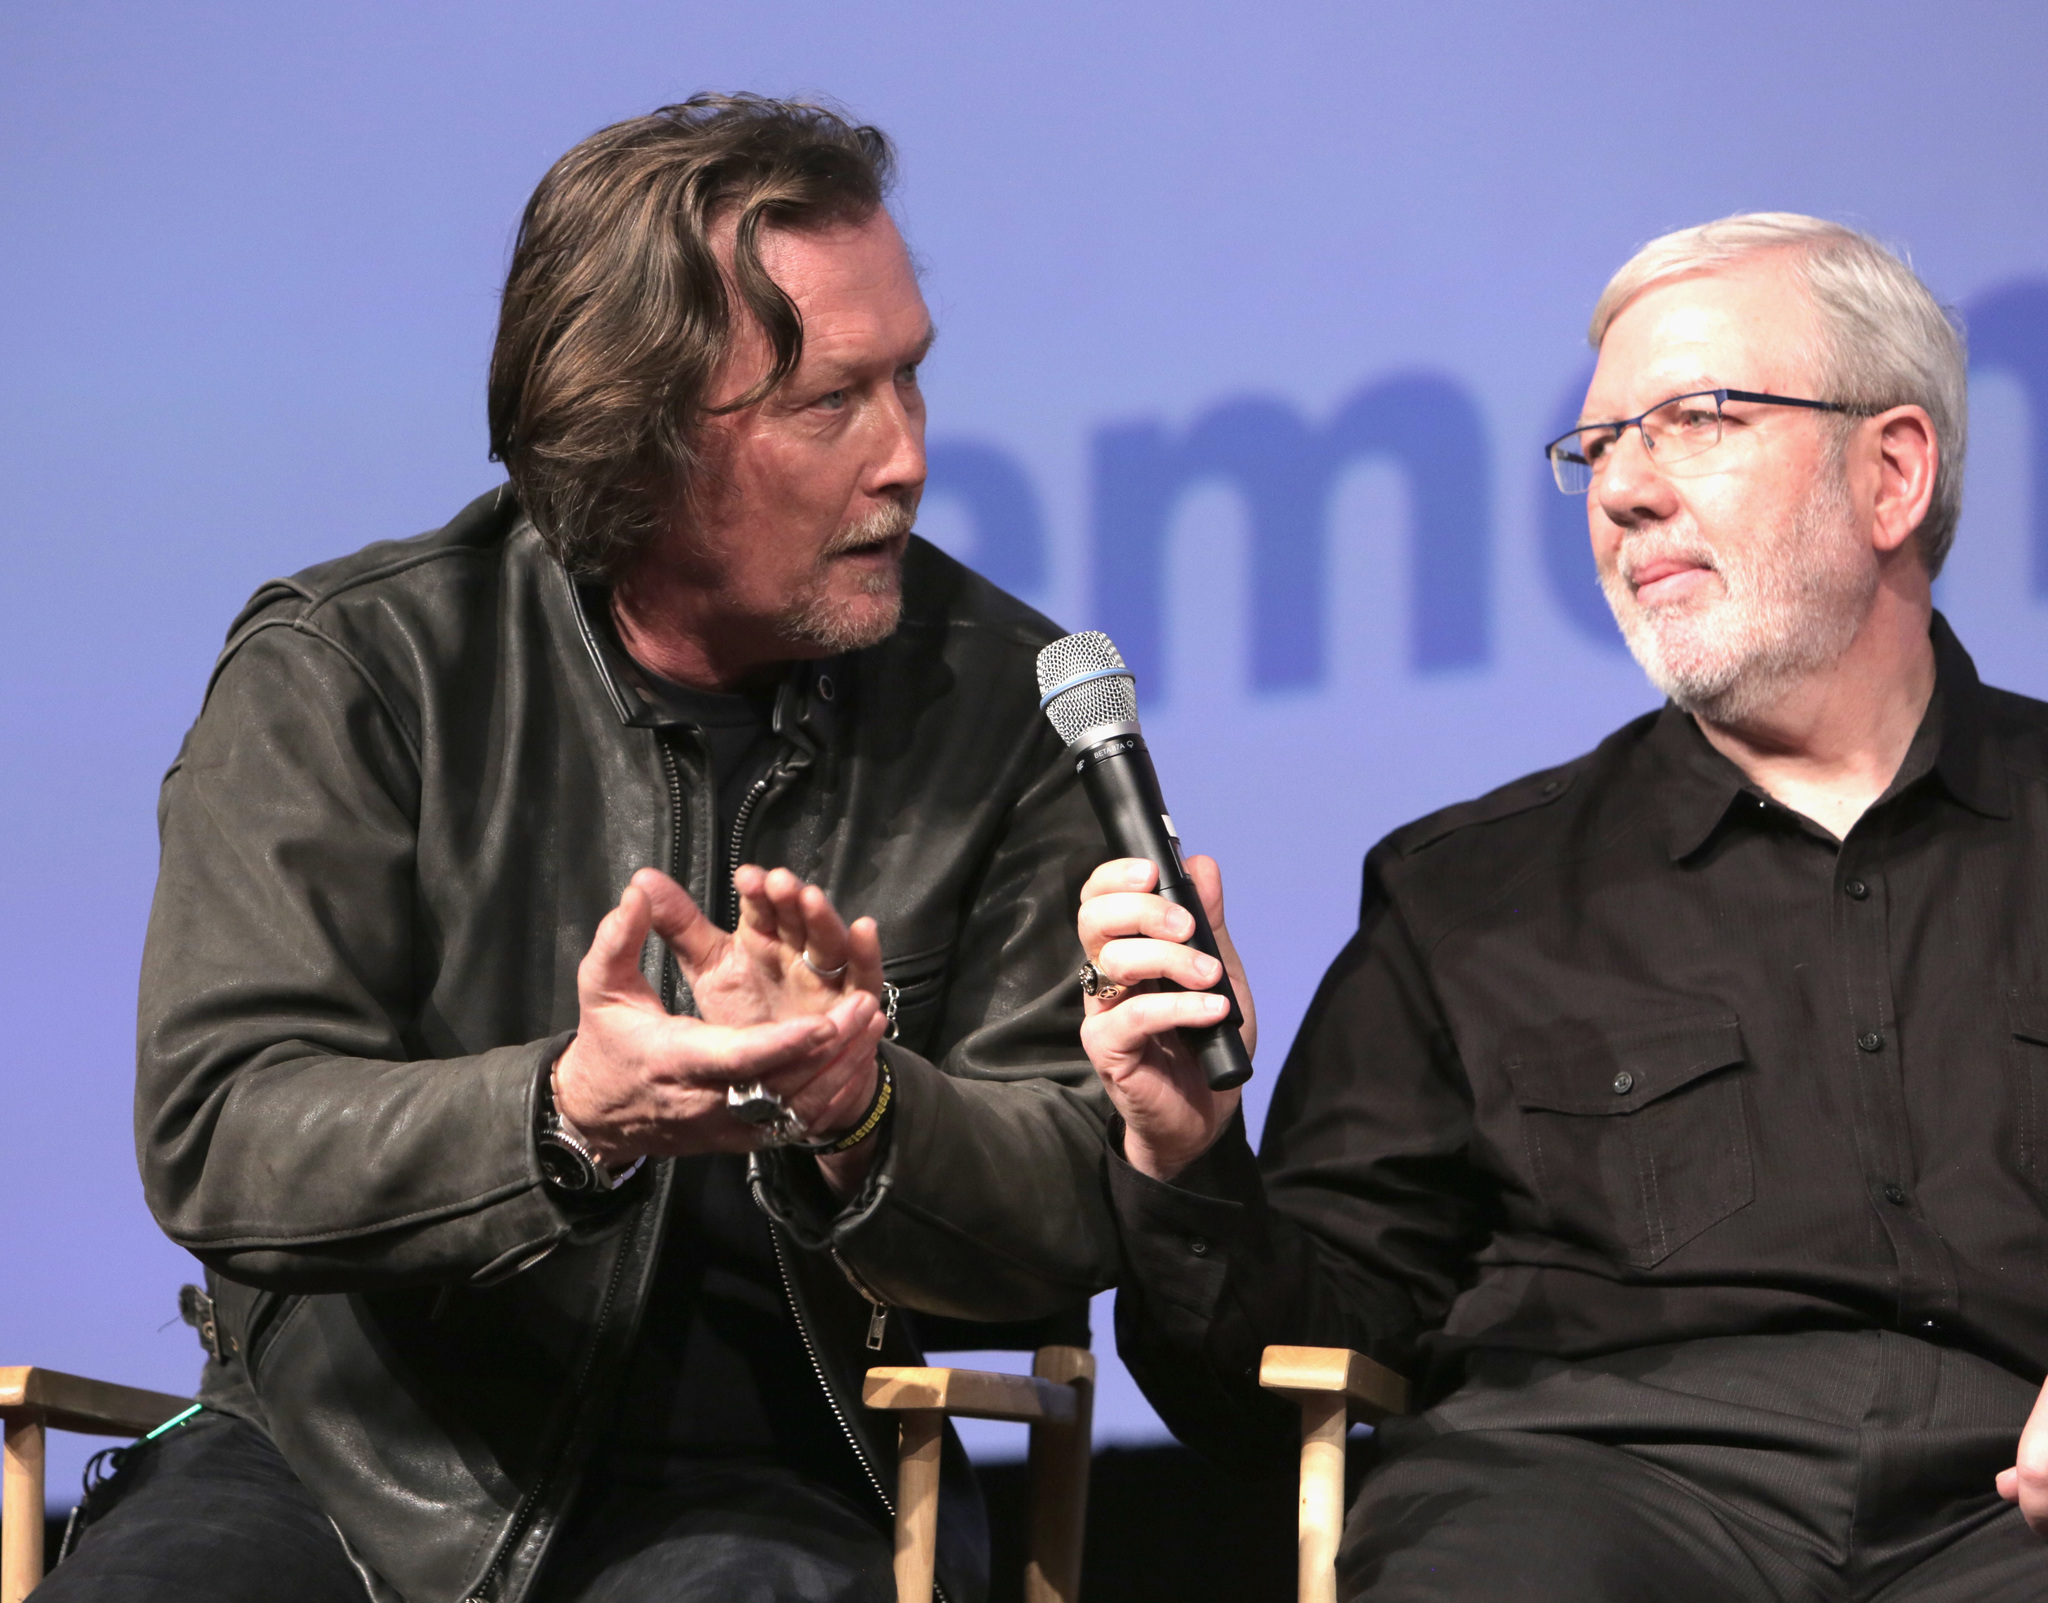 Robert Patrick and Leonard Maltin at event of From Dusk Till Dawn (2014)